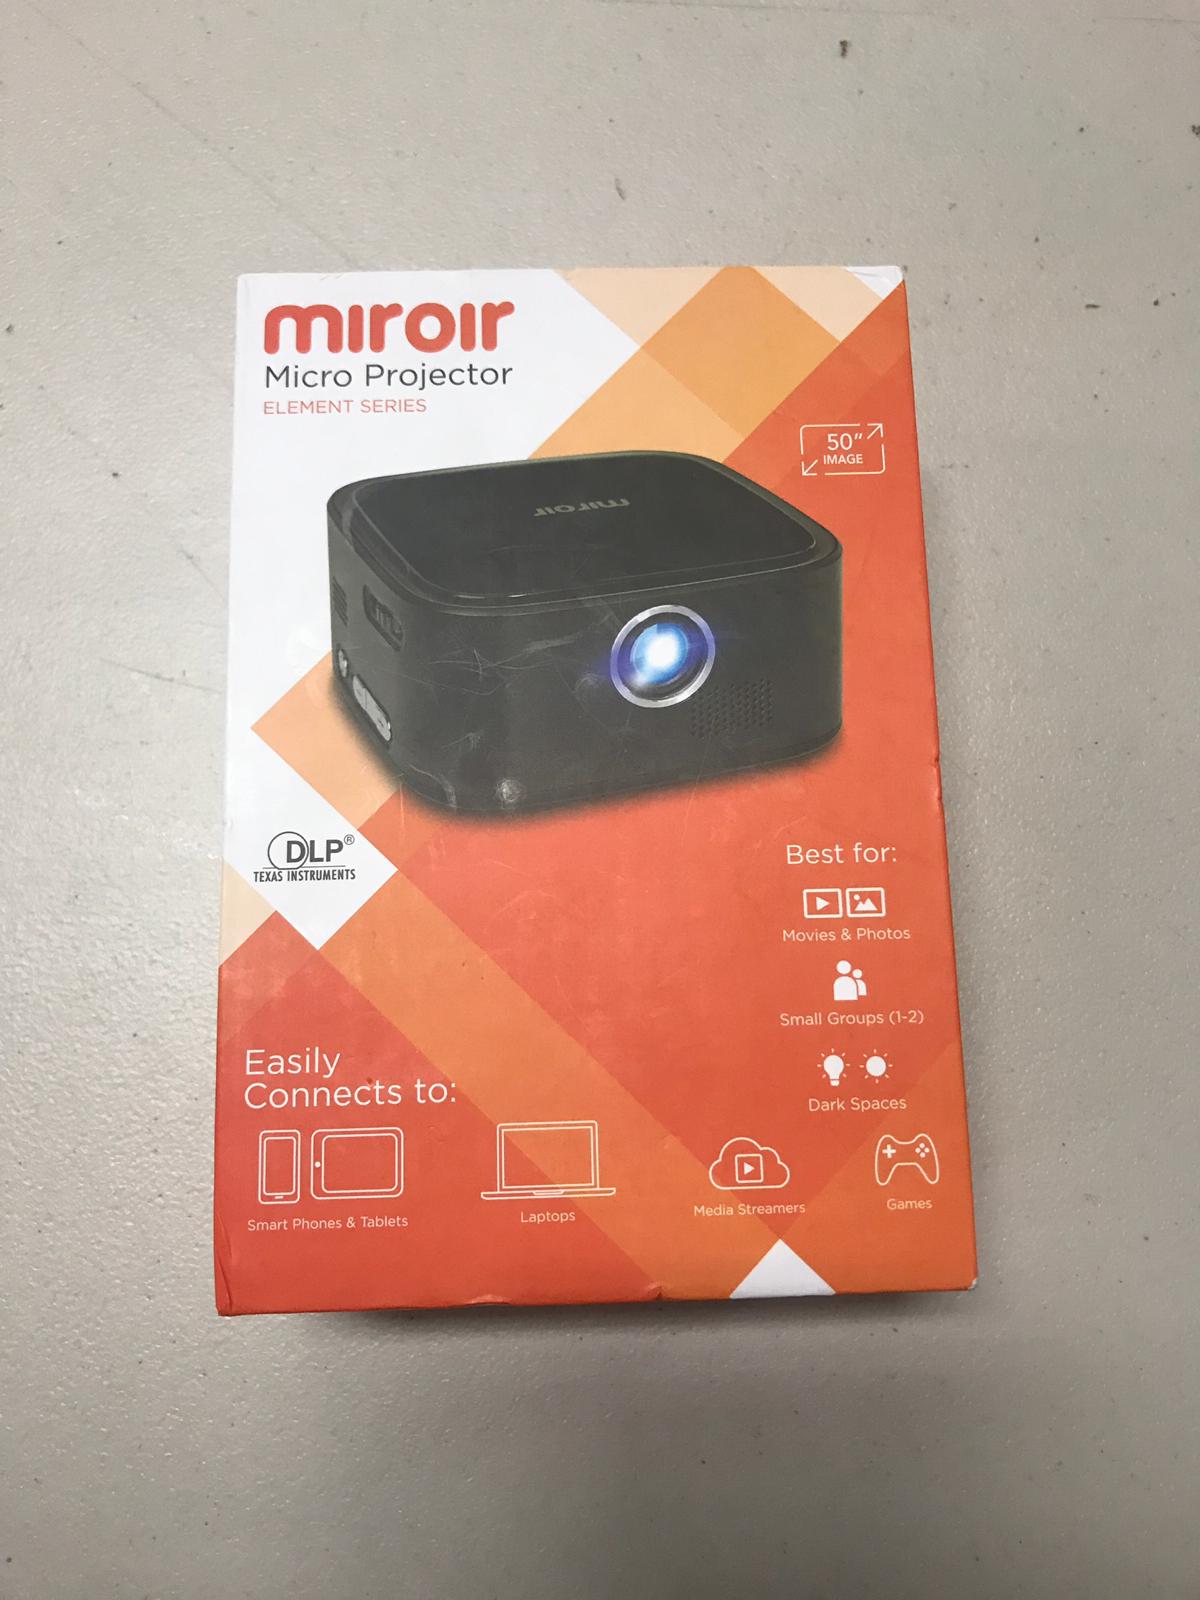 miroir micro projector m45 element